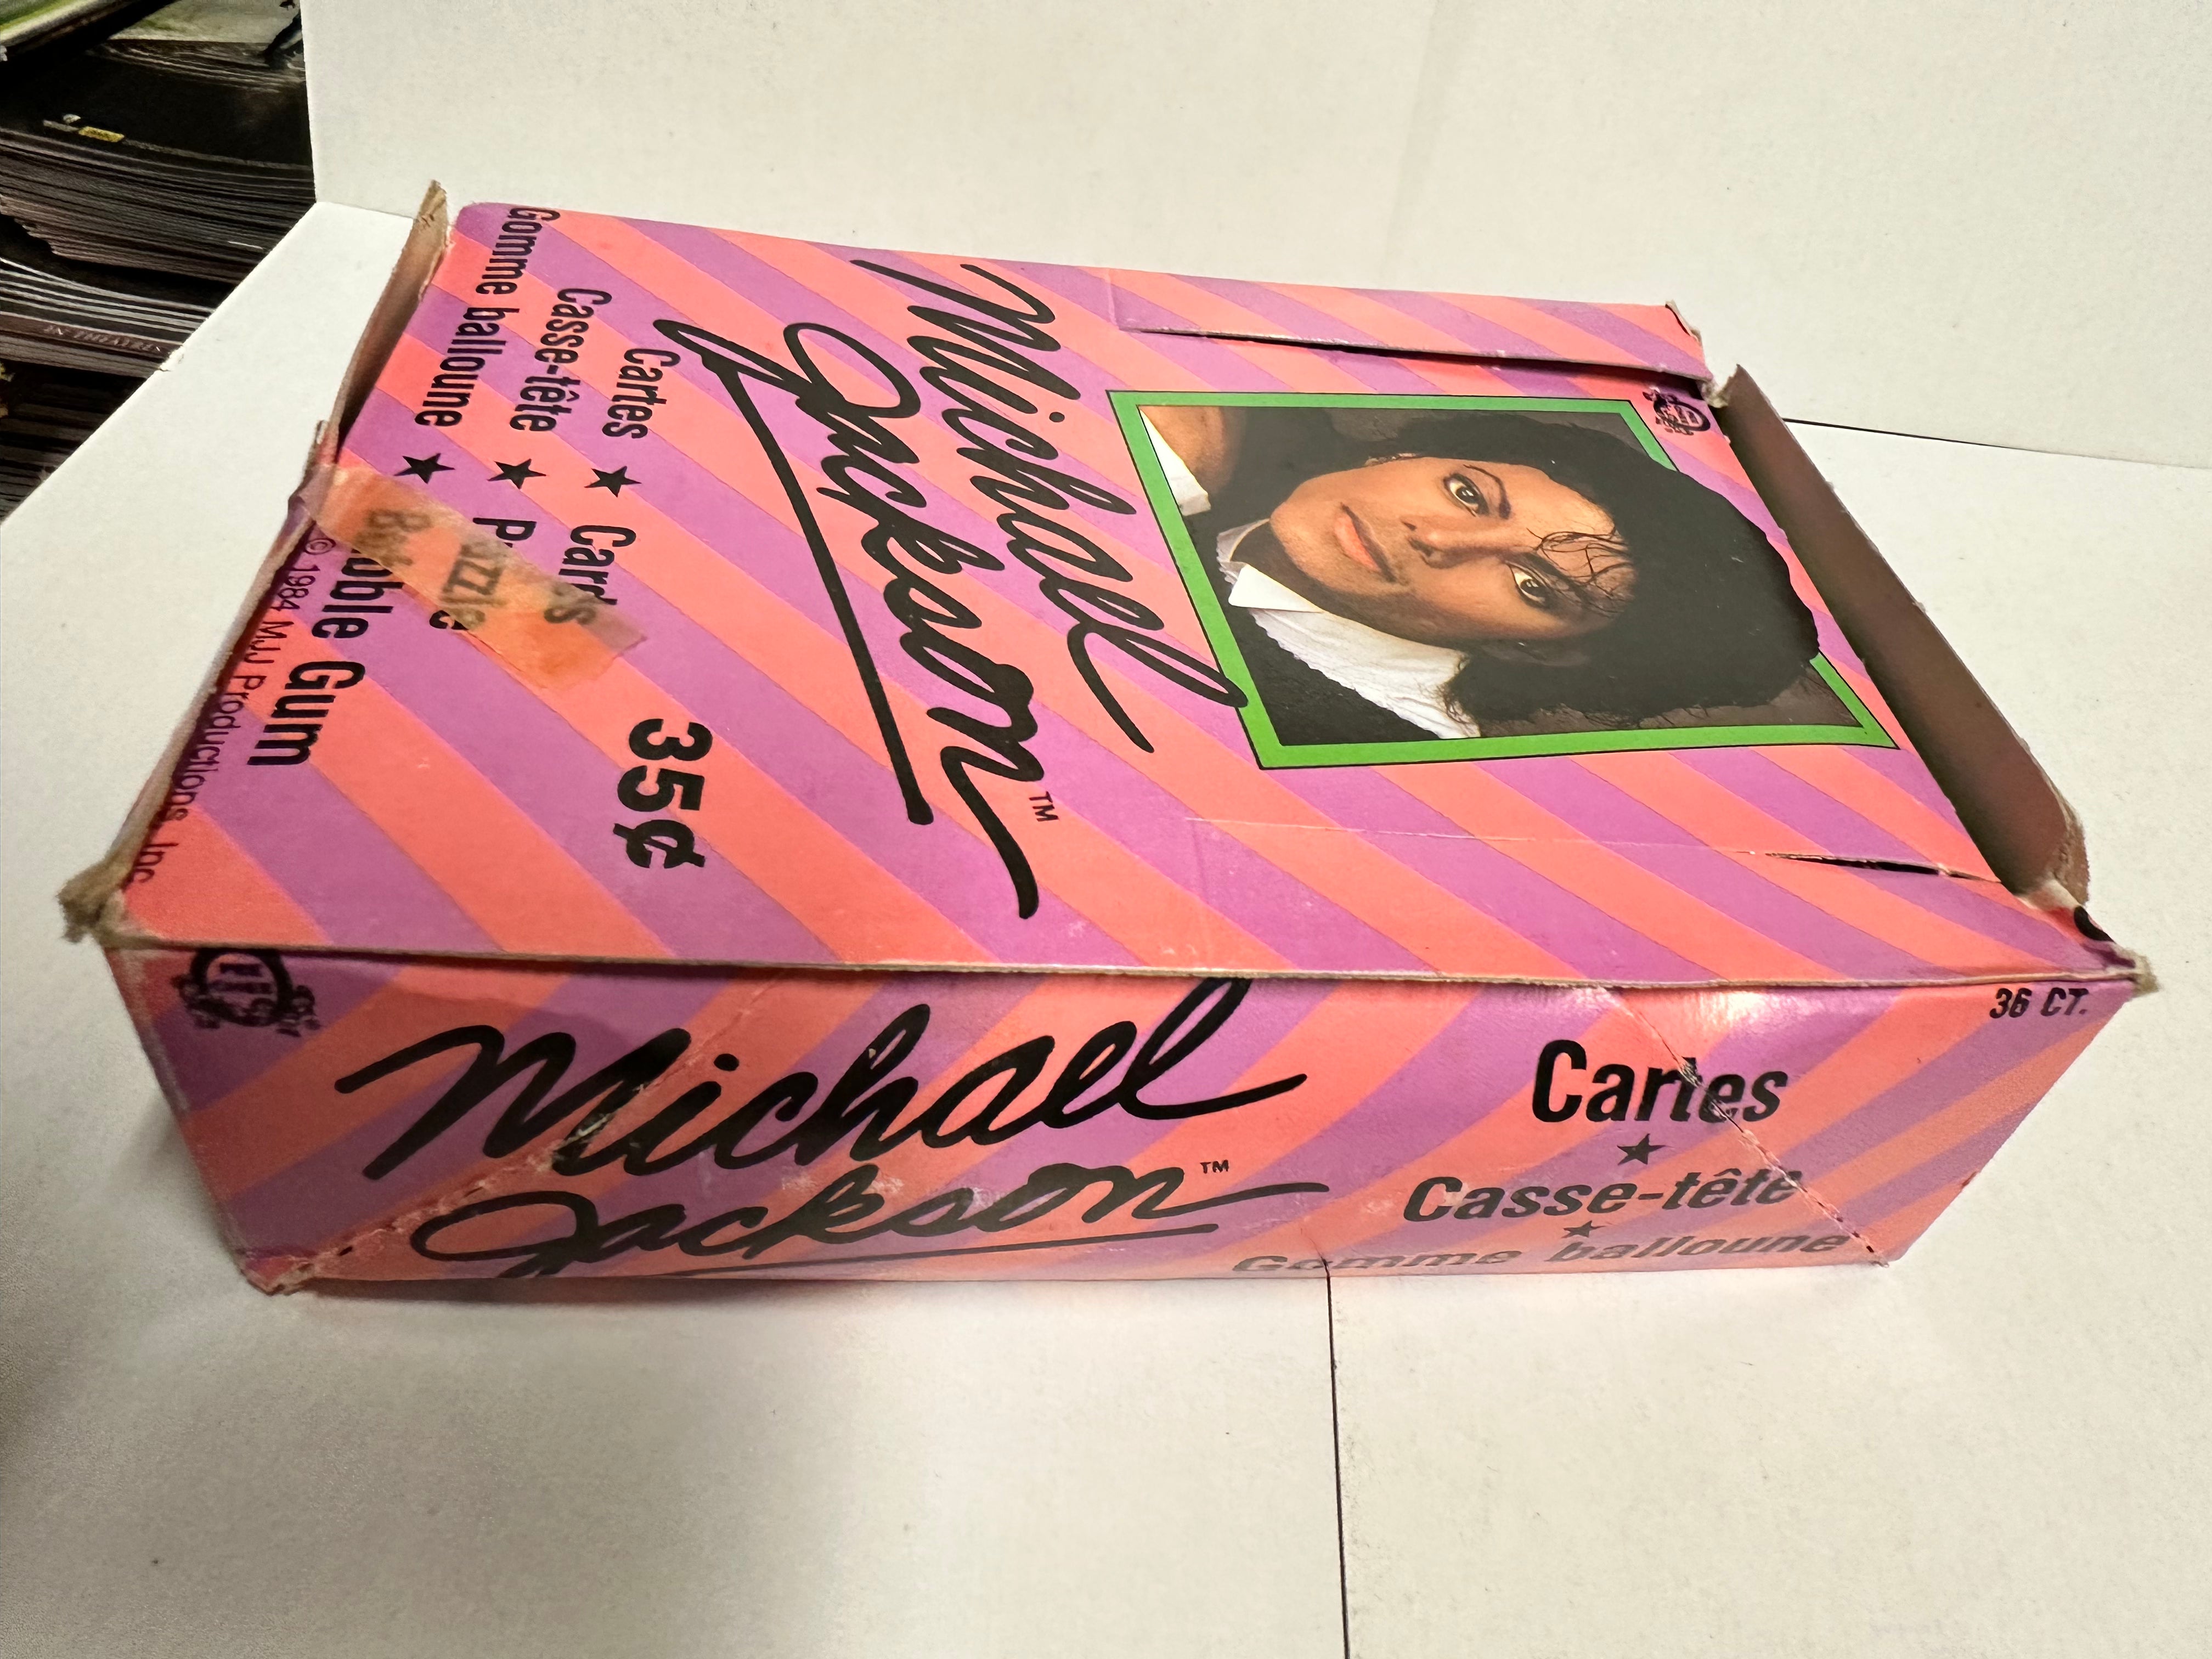 Michael jackson opc Canadian rarer version sealed cards box 1984